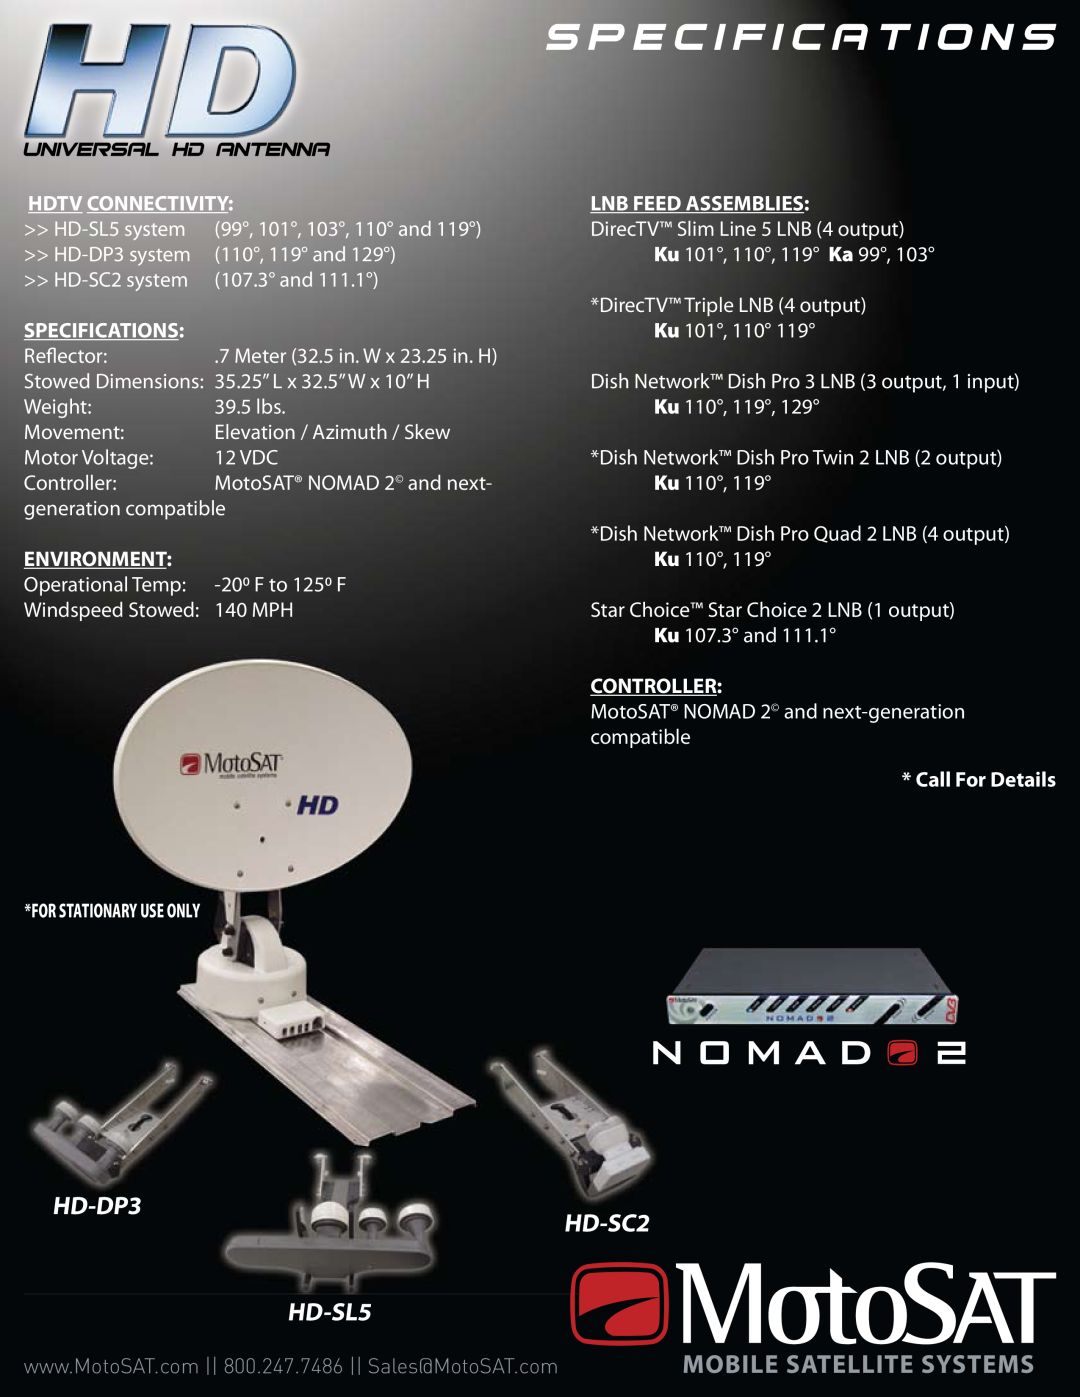 MotoSAT HD-SC2 manual HD-DP3, HD-SL5, Hdtv Connectivity, Specifications, Lnb Feed Assemblies, Environment, Controller 